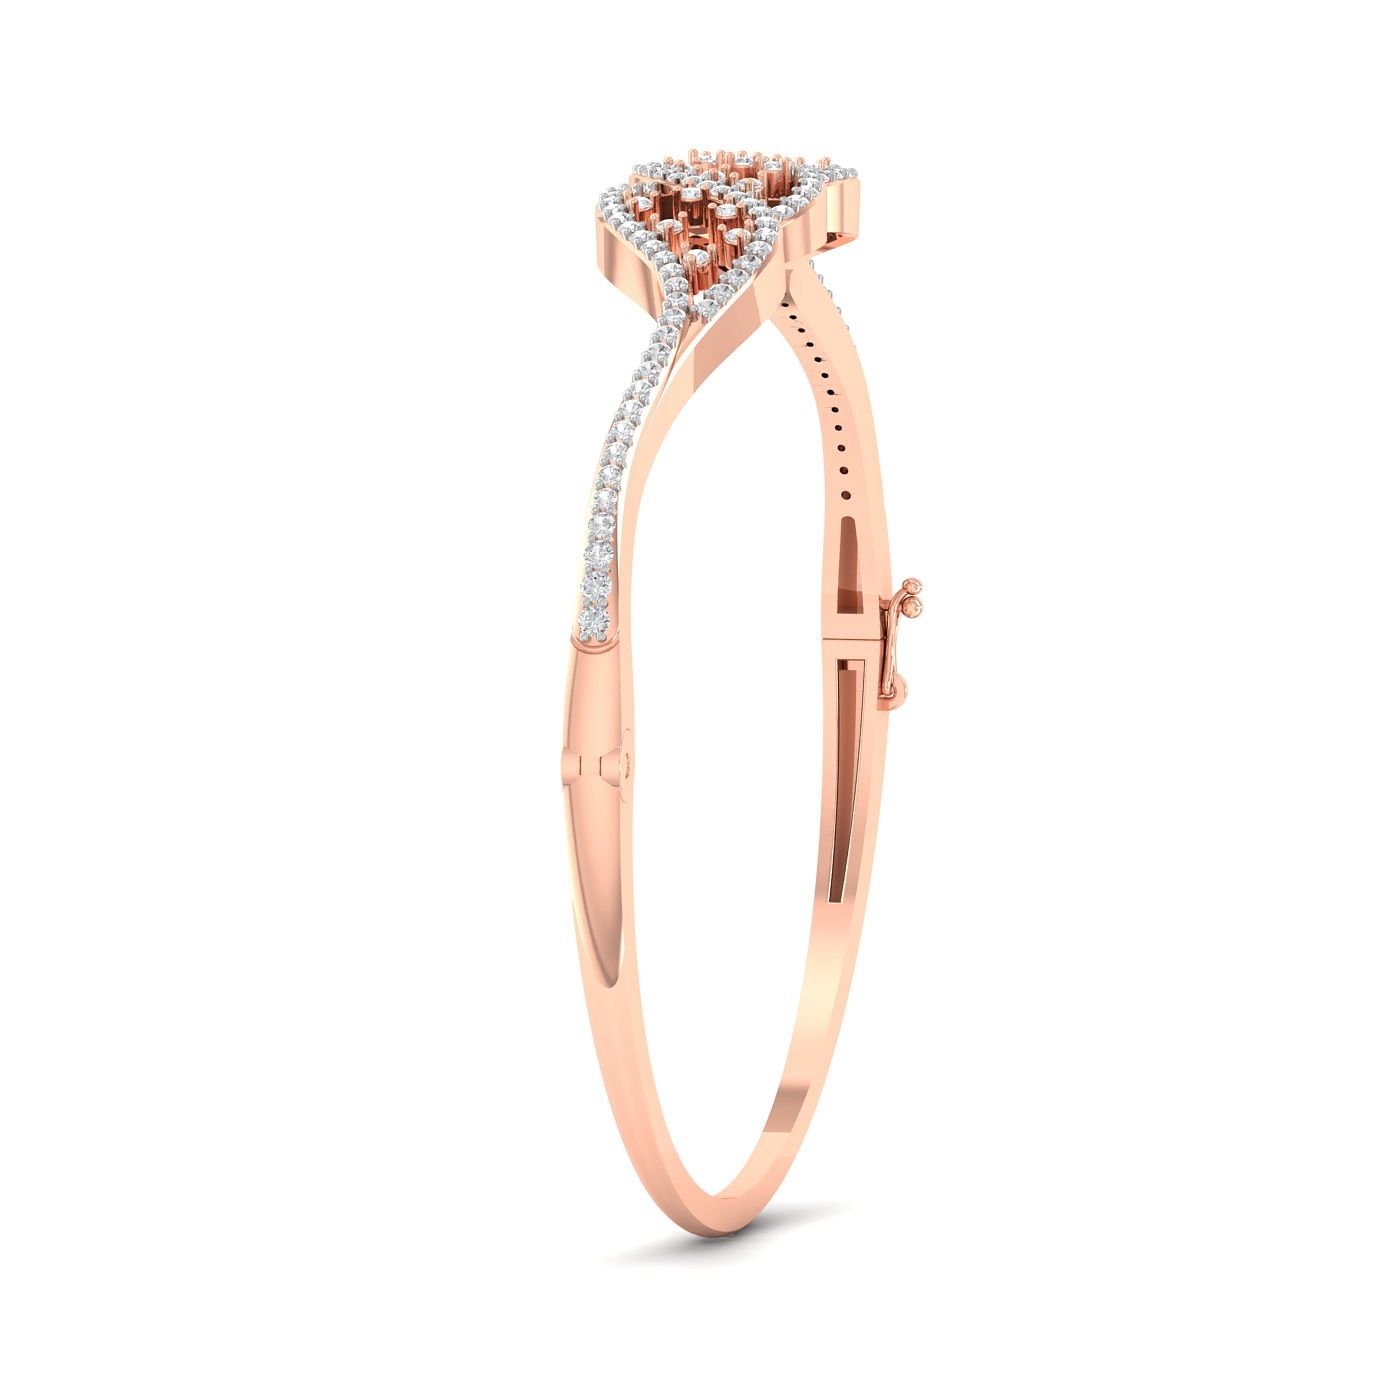 Designer engagement rose gold Kaylee Diamond Bracelet